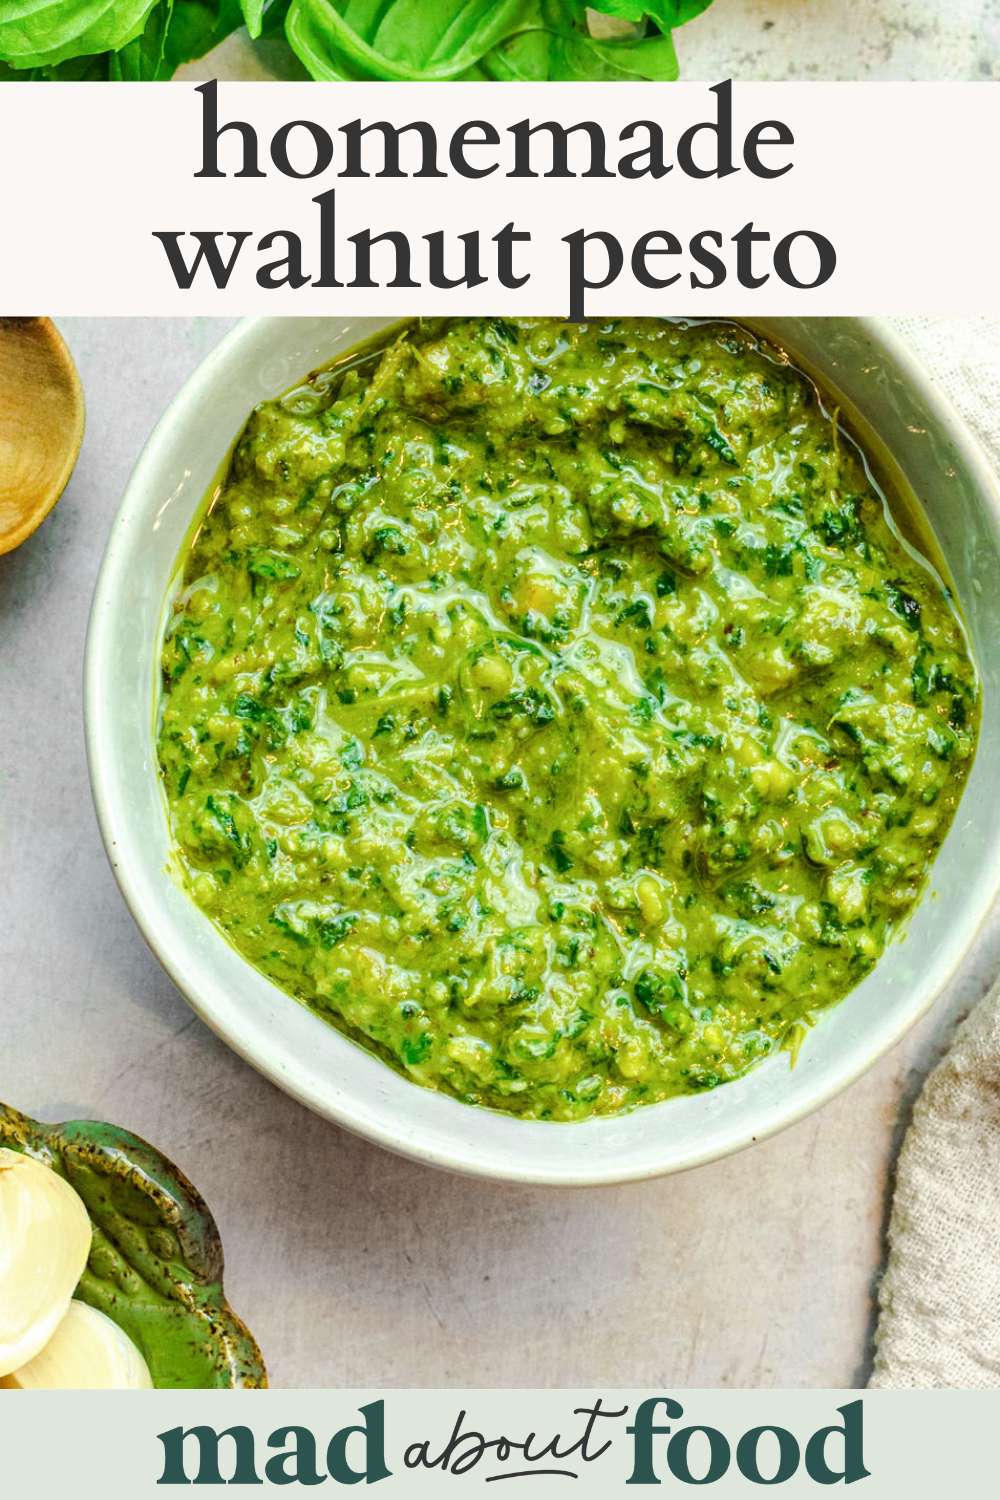 Image for pinning Homemade Walnut Pesto recipe on Pinterest